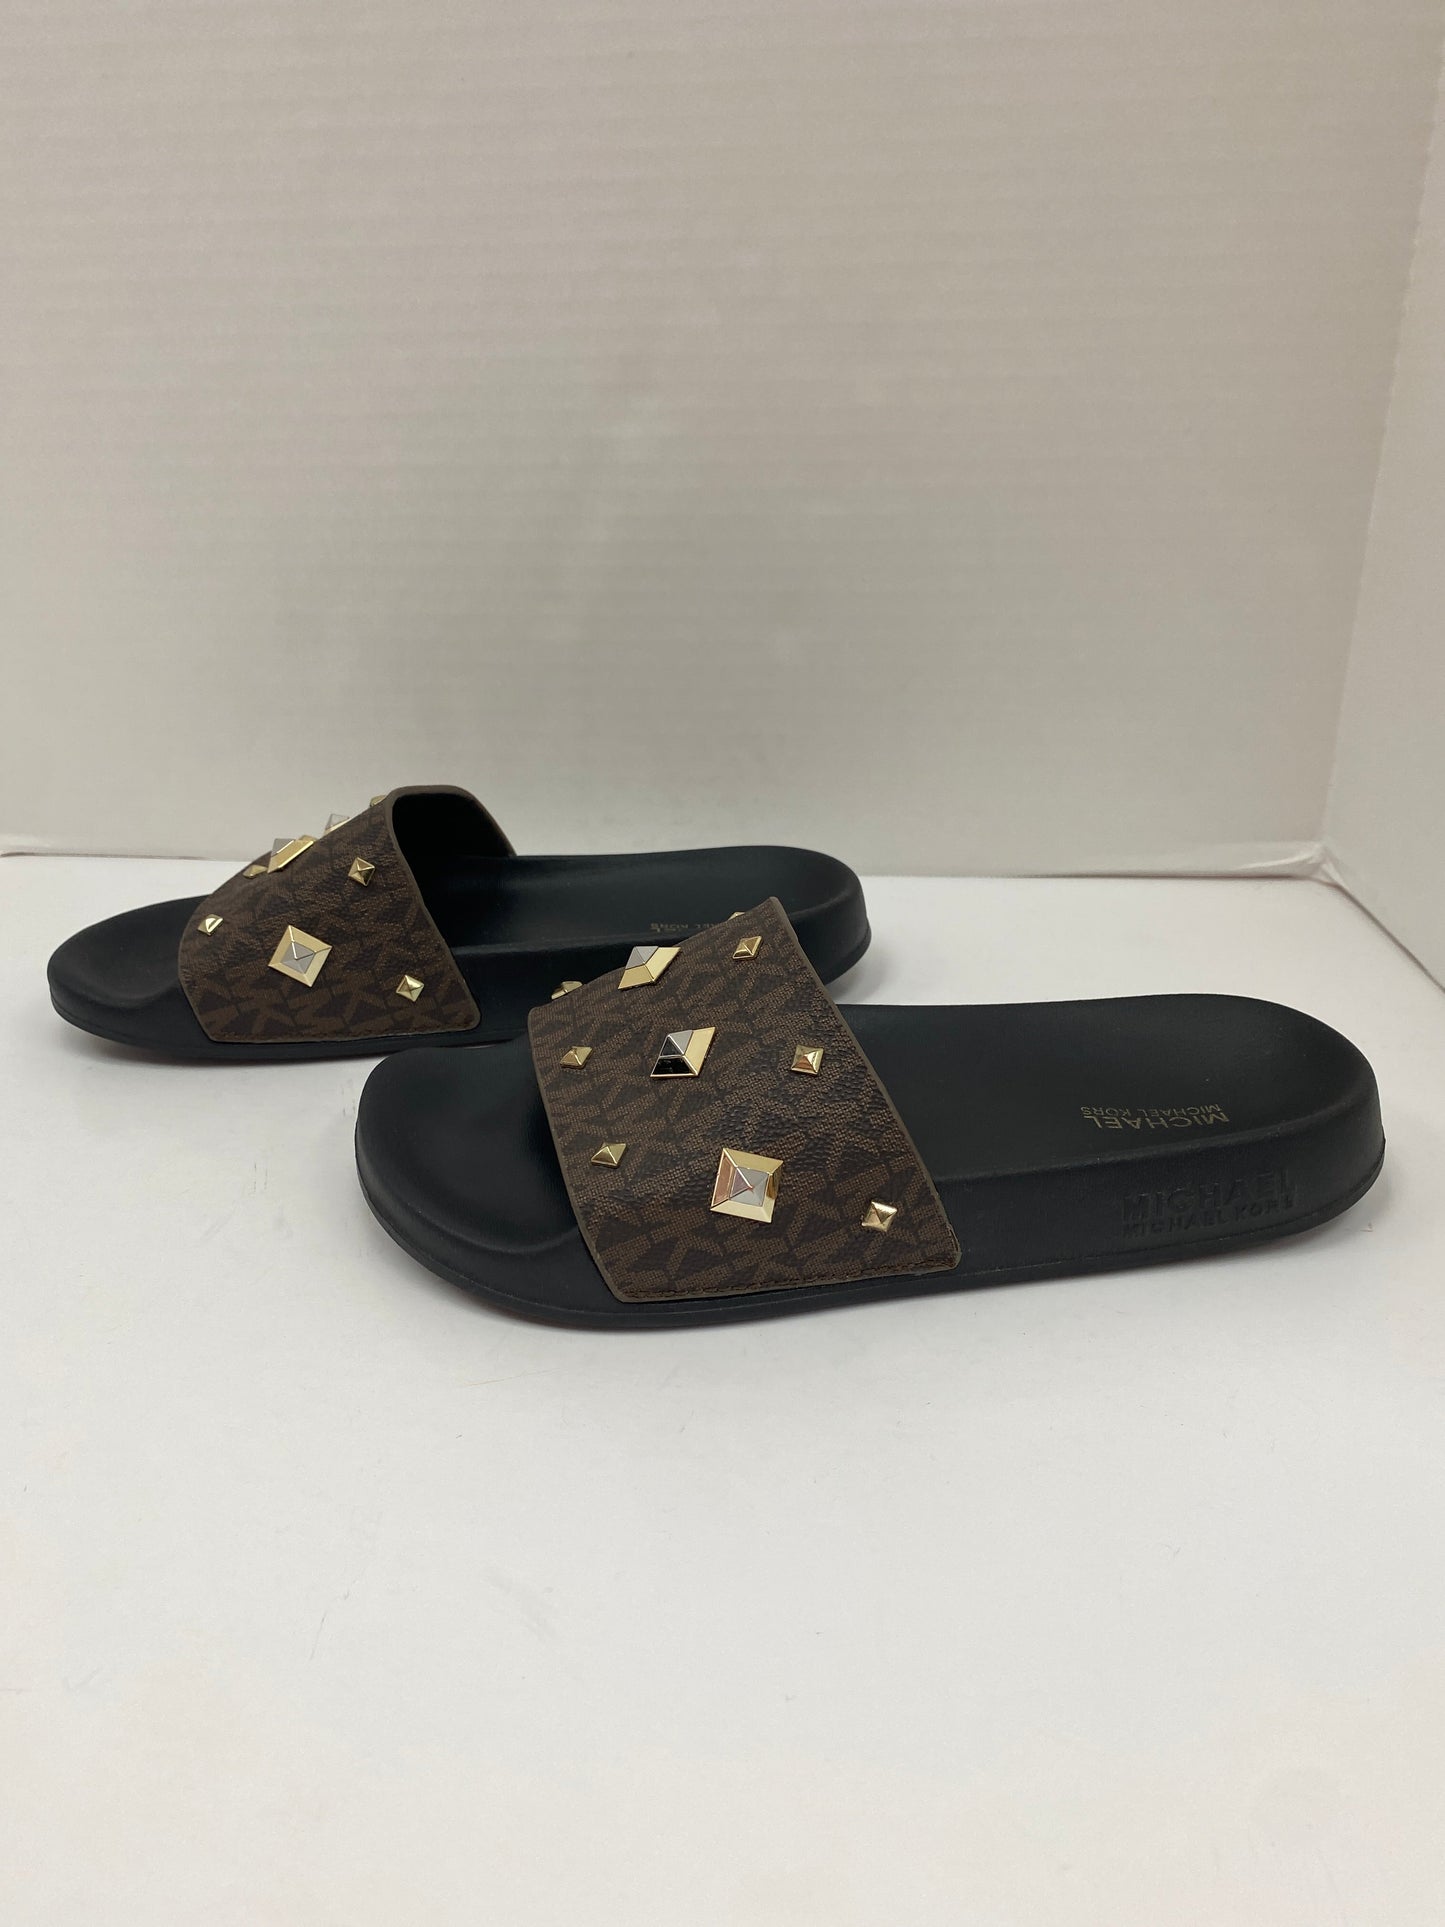 Brown Sandals Designer Michael By Michael Kors, Size 6